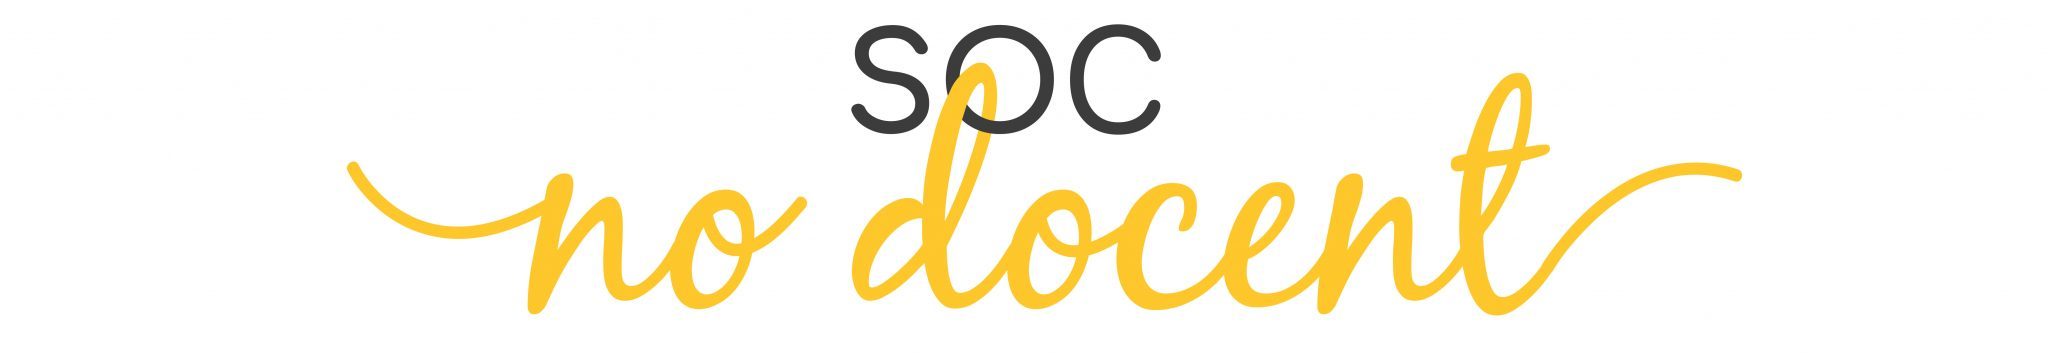 SOC_No_Docent-01